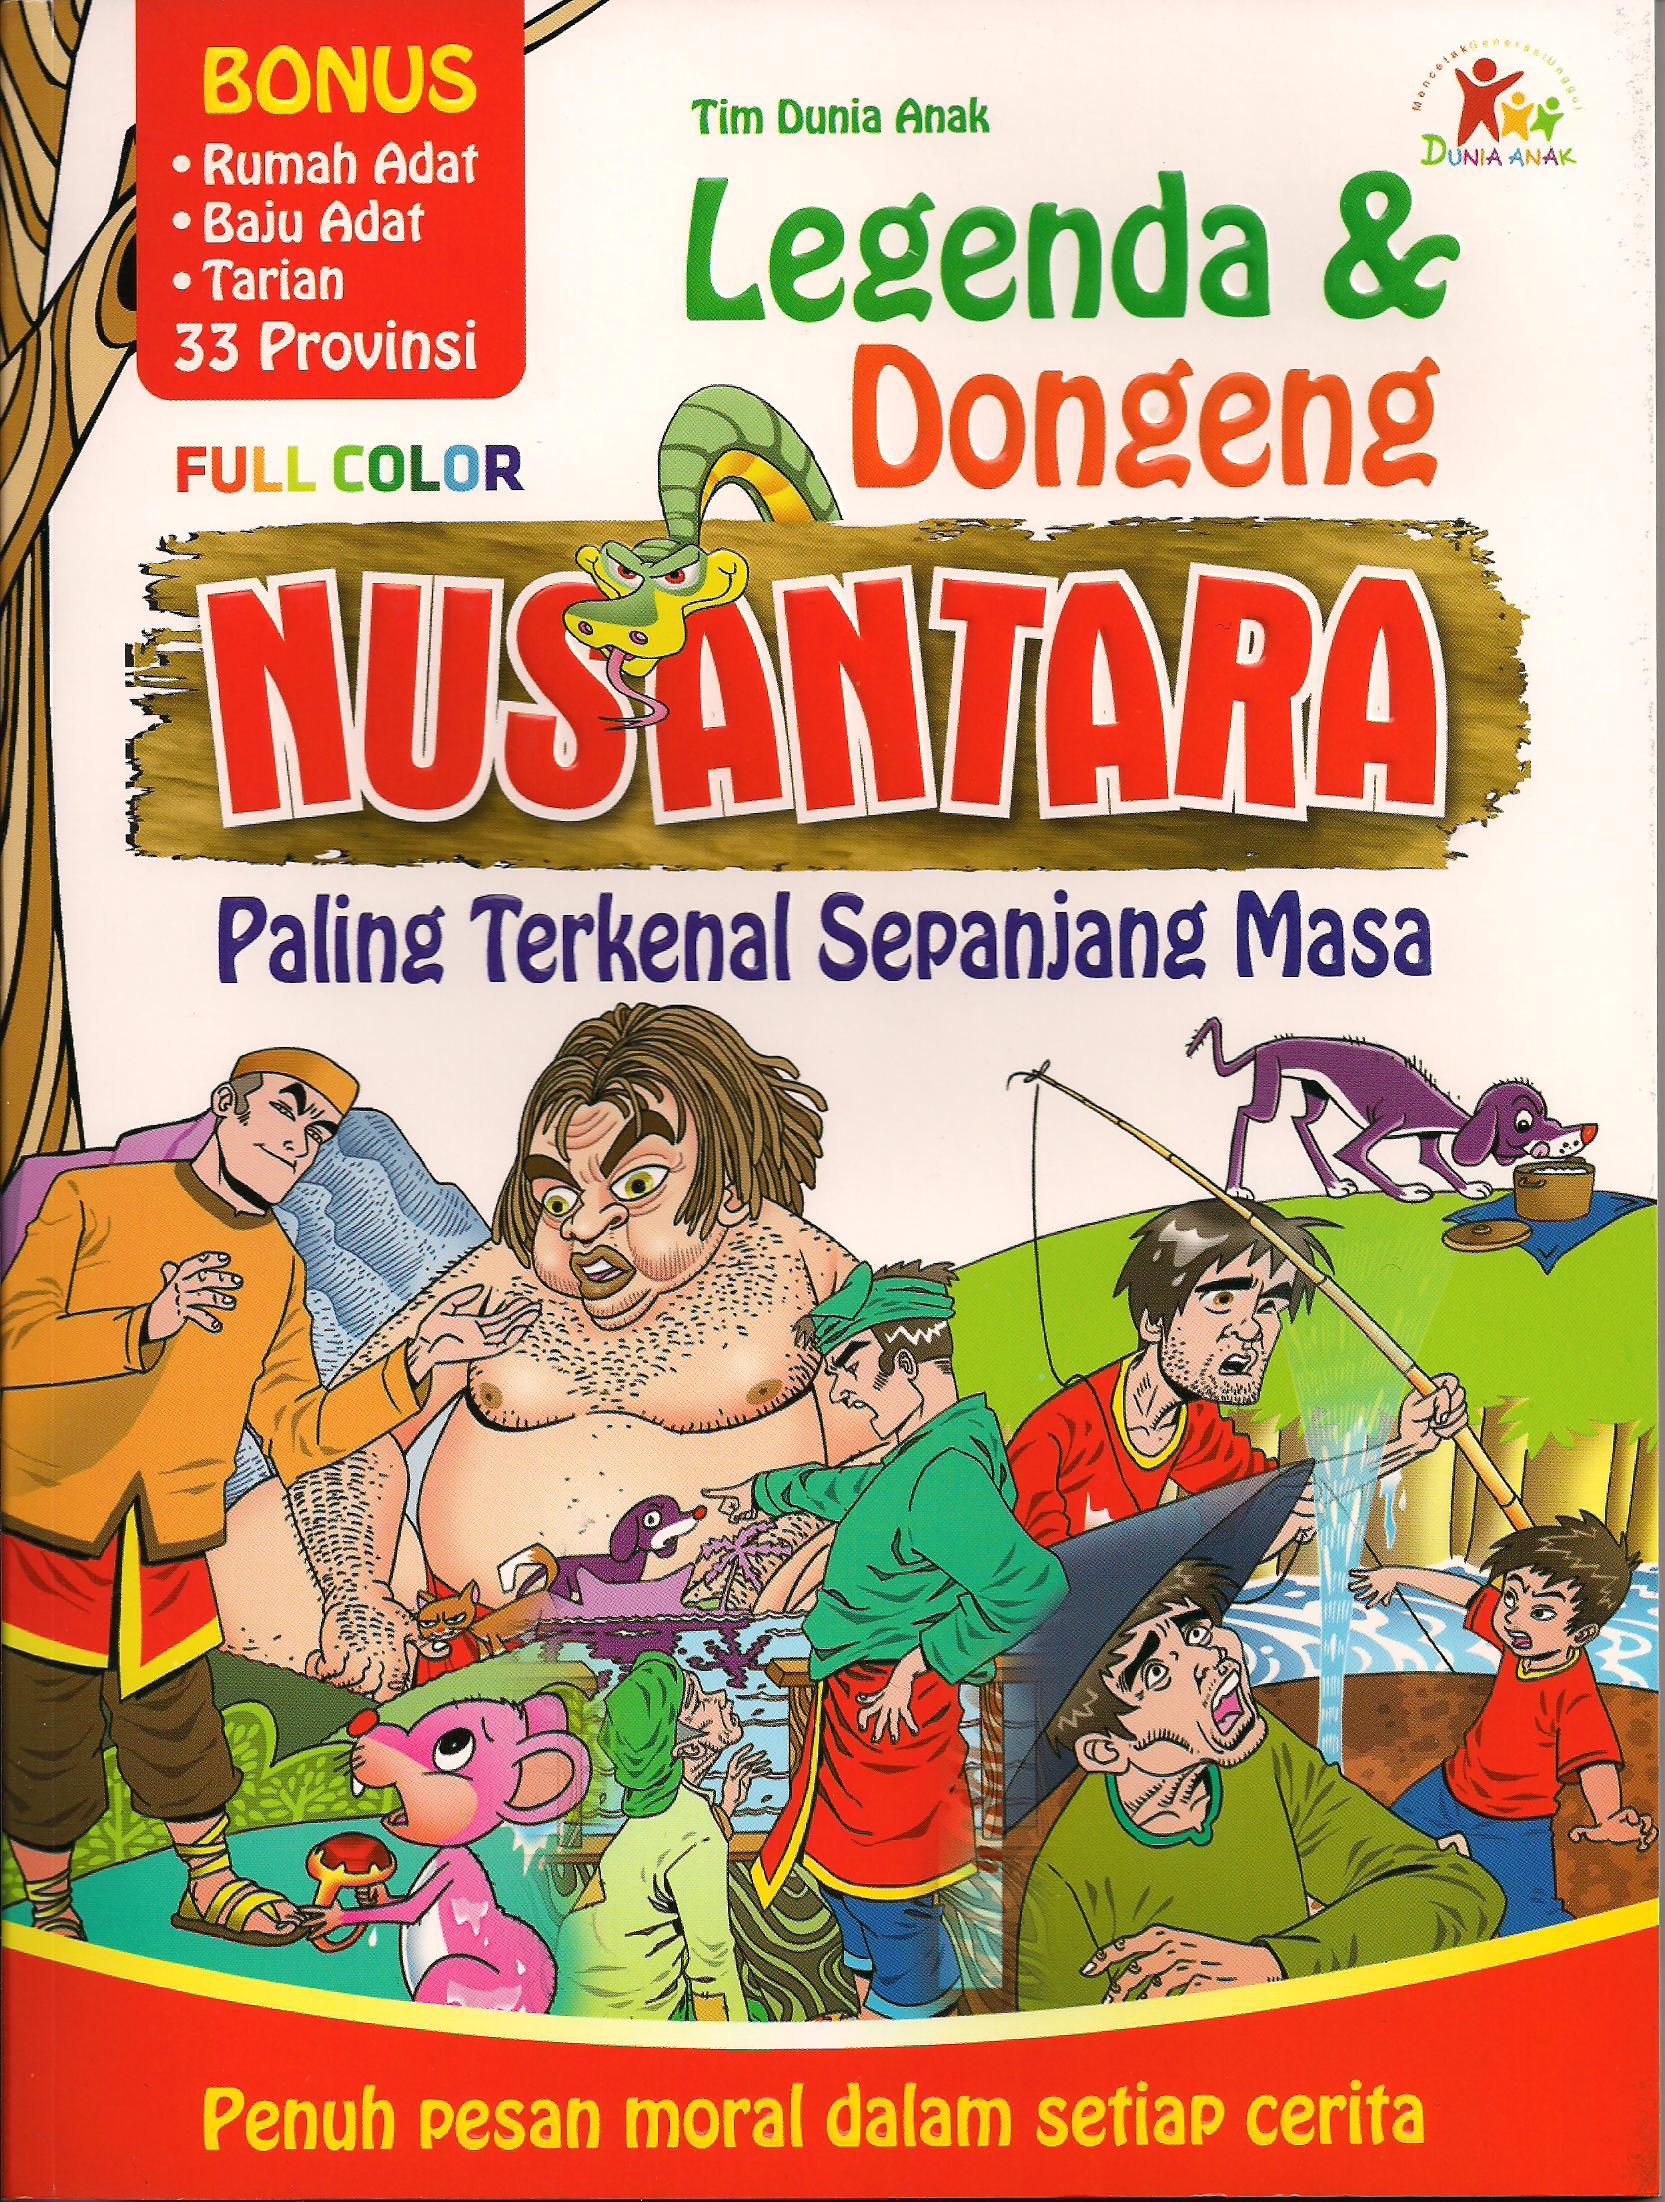 Katalog Buku Cerita Rakyat Indonesia Indonesian Education